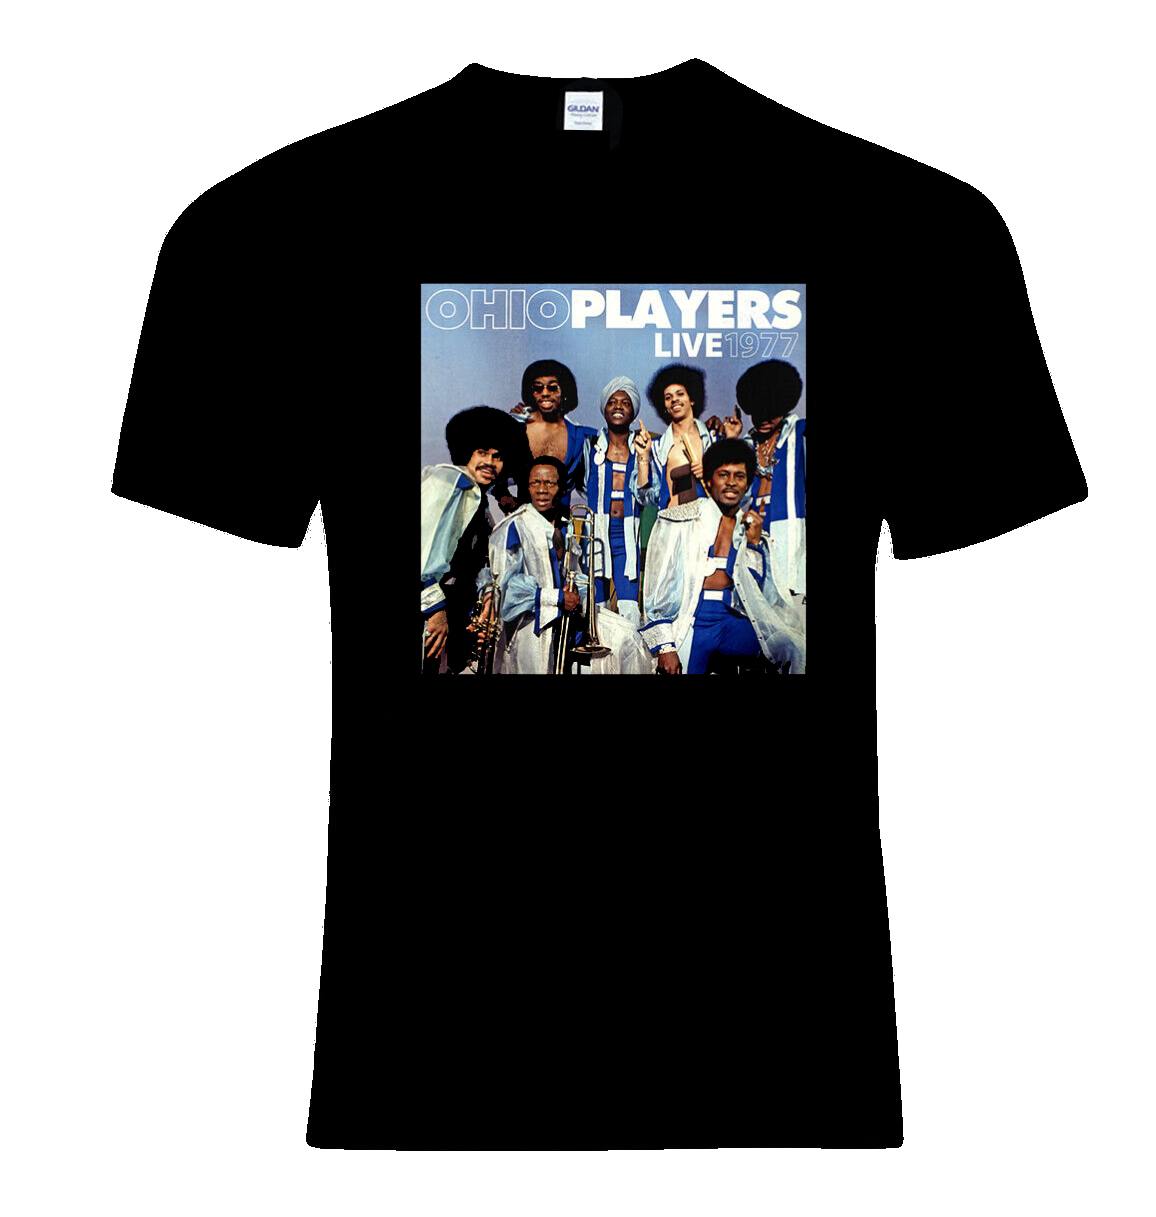 OHIO PLAYERS 1977 Black T-shirt - $19.99 - $25.99